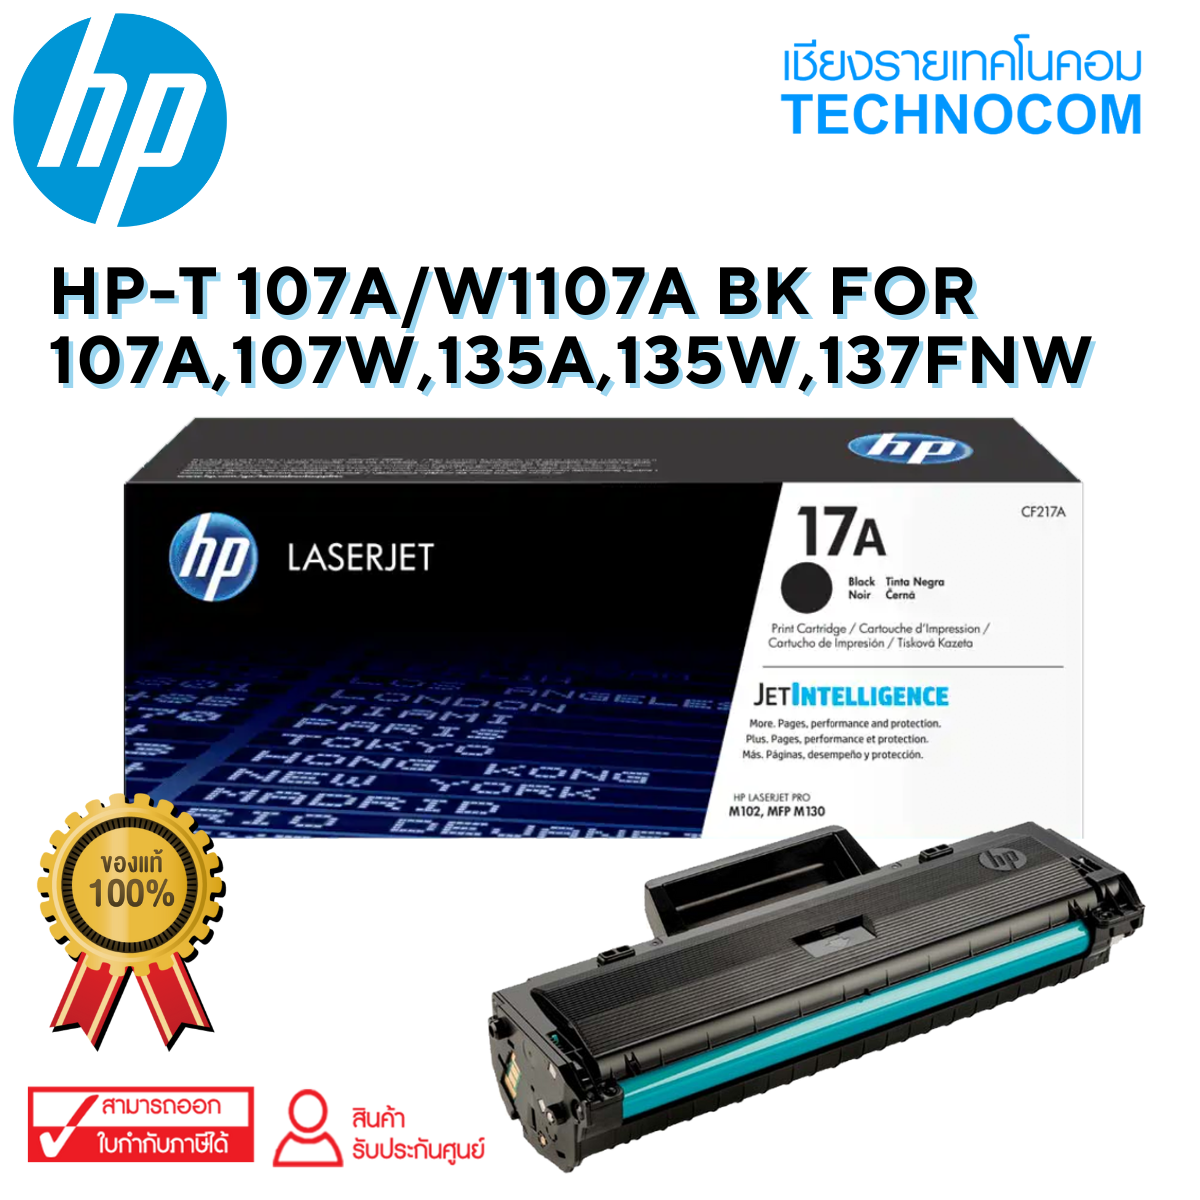 HP-T 107A/W1107A BK FOR 107a,107w,135a,135w,137fnw